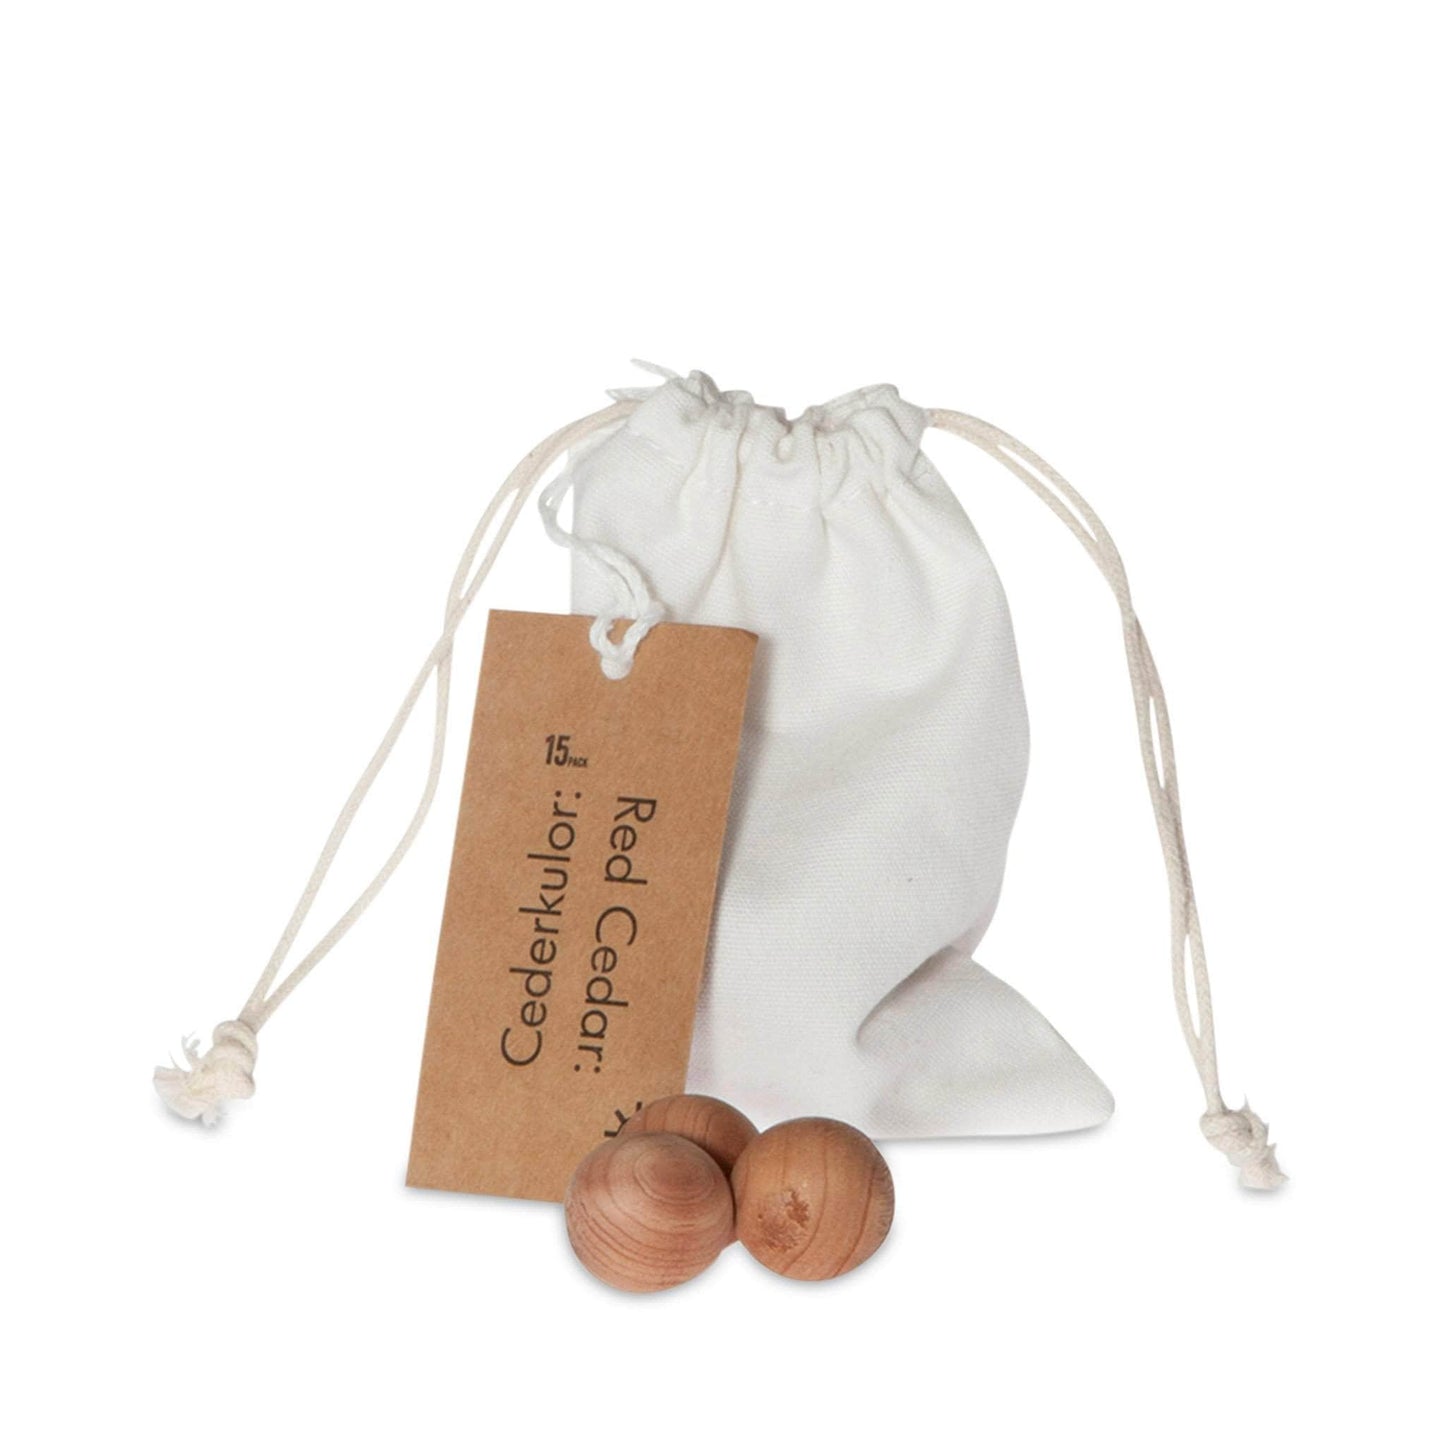 Iris Hantverk Laundry Iris Hantverk Red Cedarwood Balls In Cotton Bag - 10 Pieces